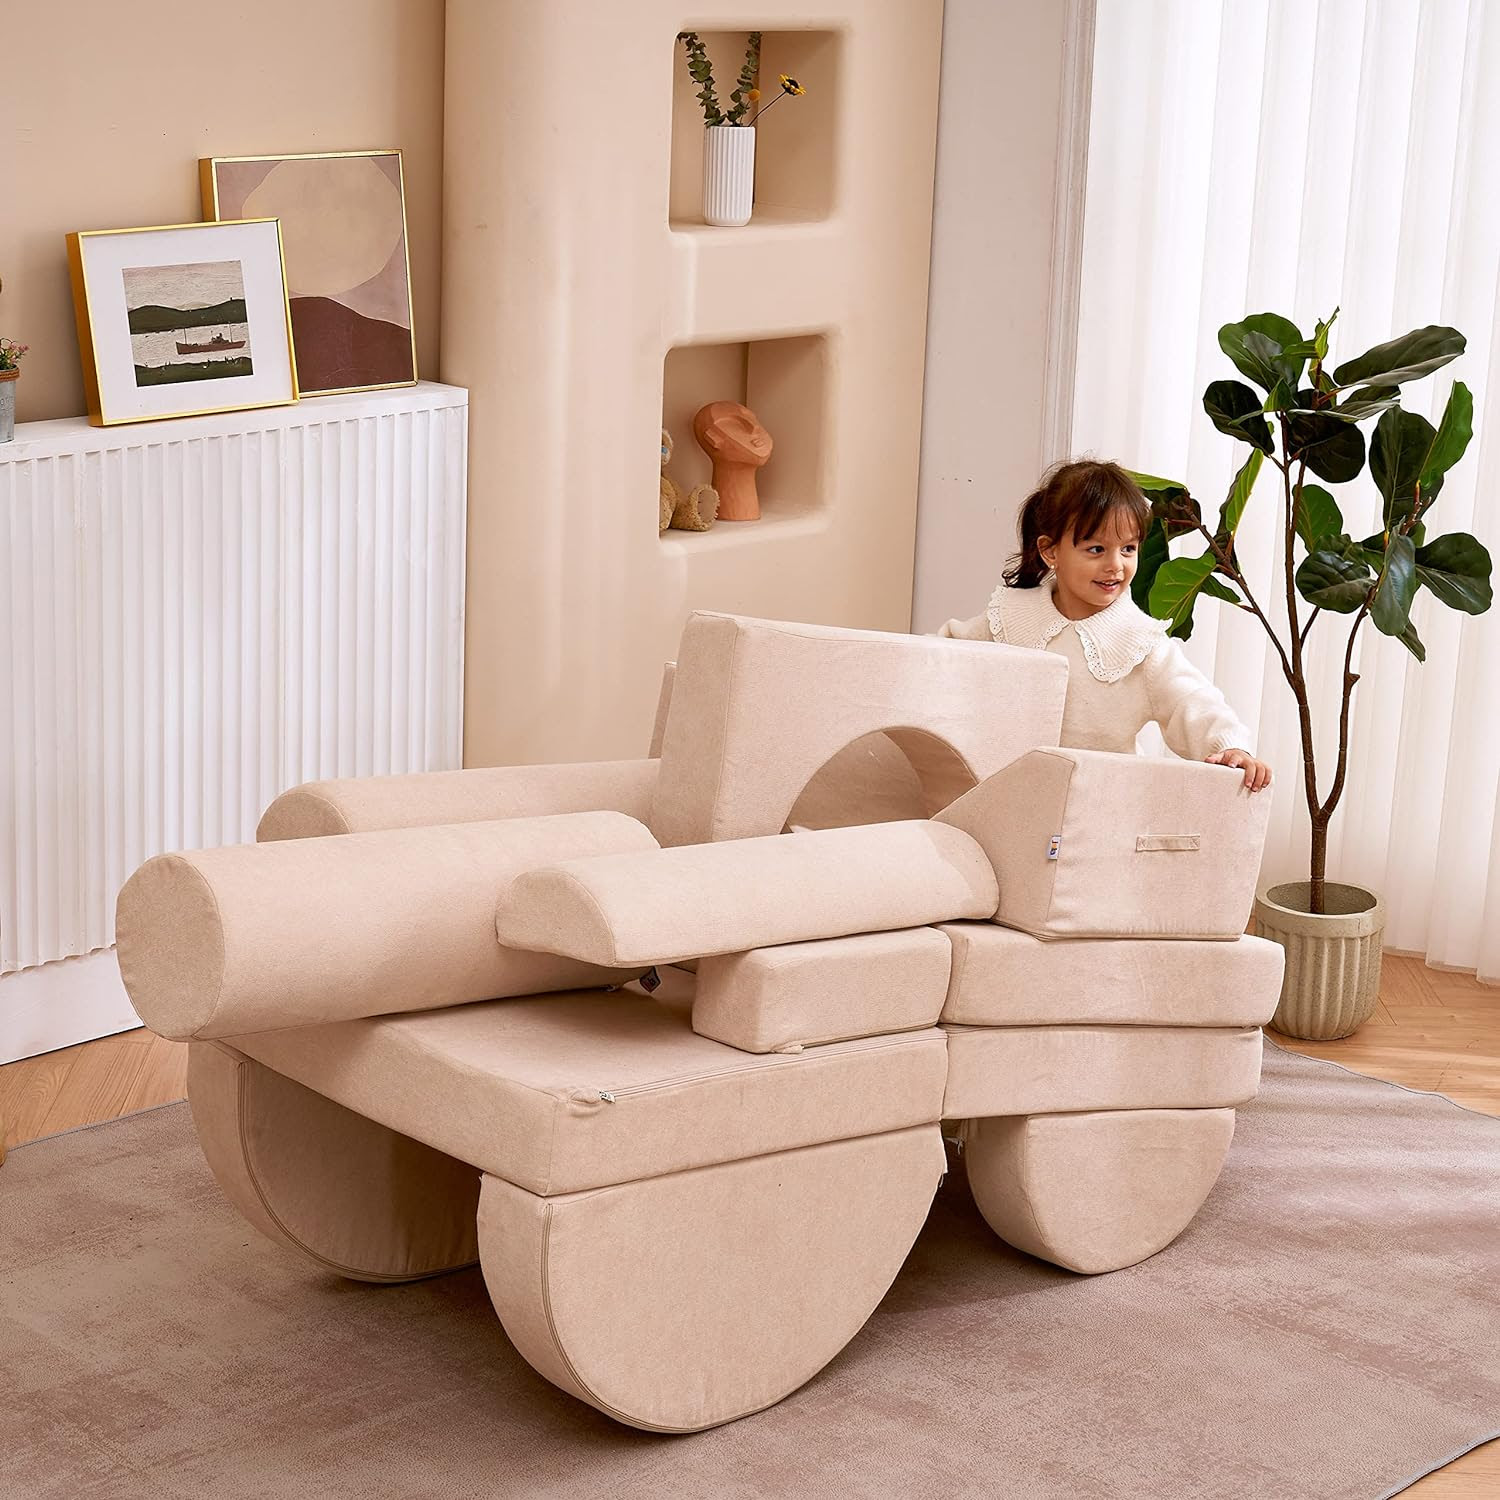 Kids Modular Foam Play Couch. 1059 Sets. 